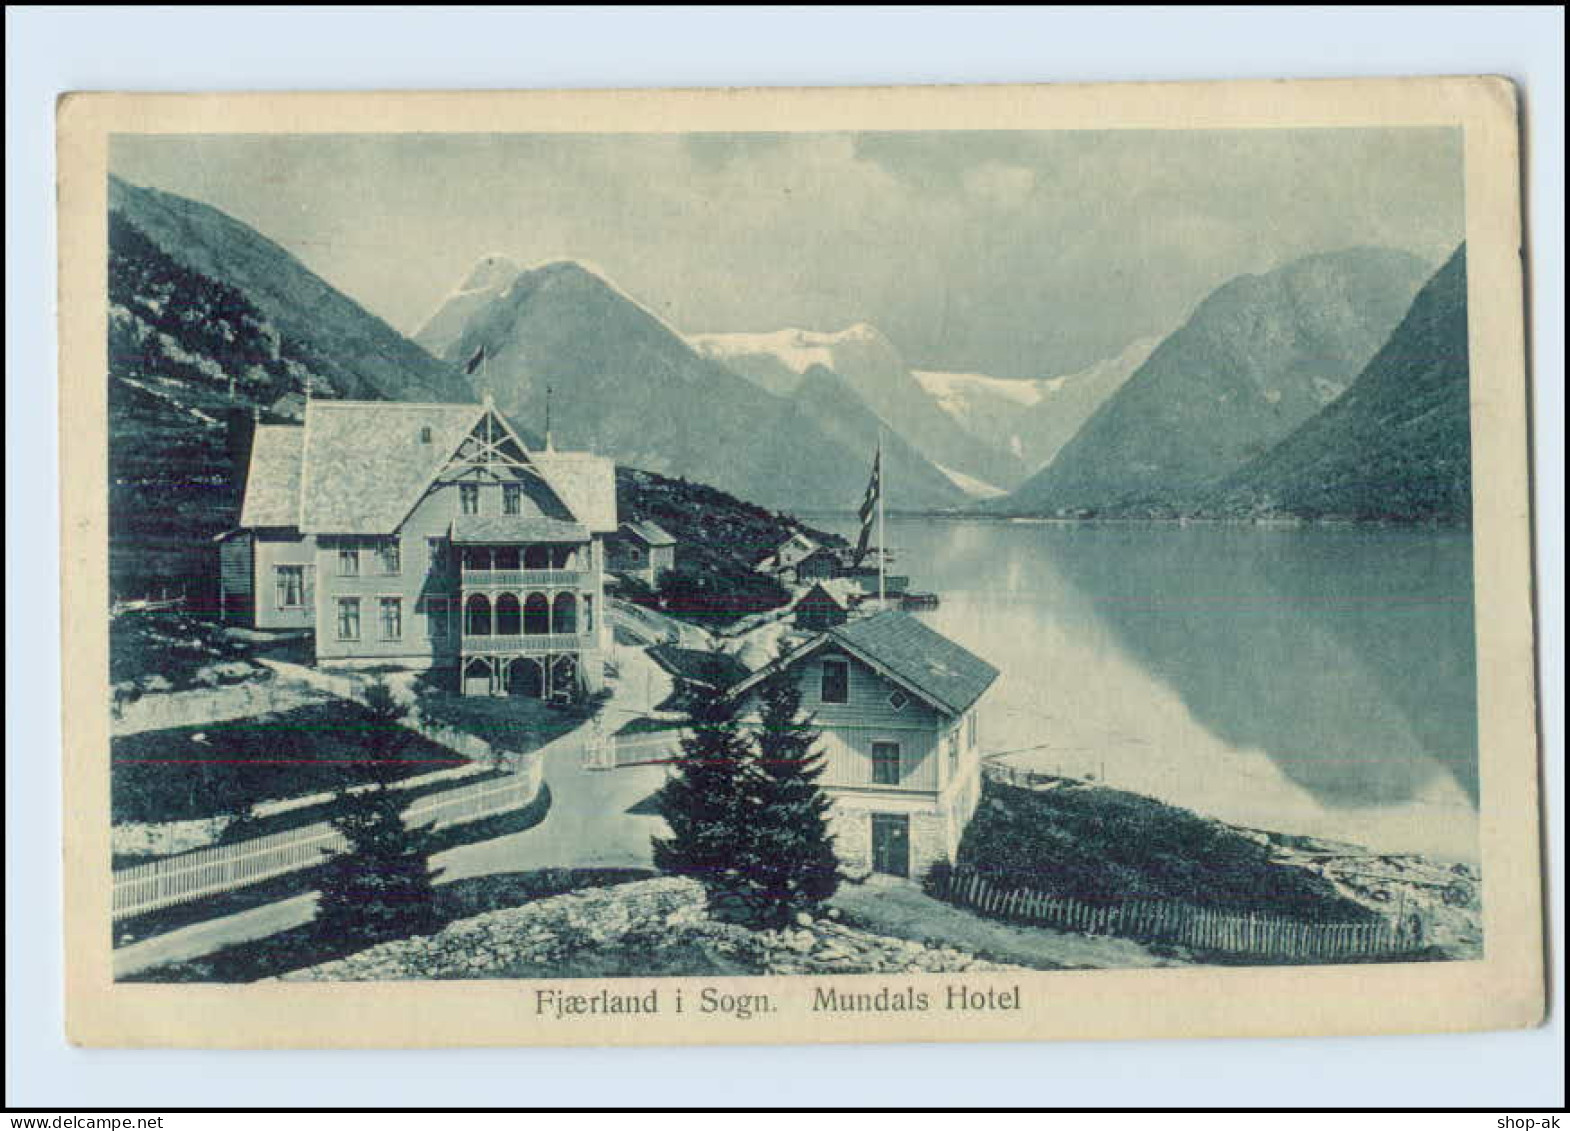 N011/ Fjaerland I Sogn In Norwegen, Mundals Hotel AK 1911 - Norway